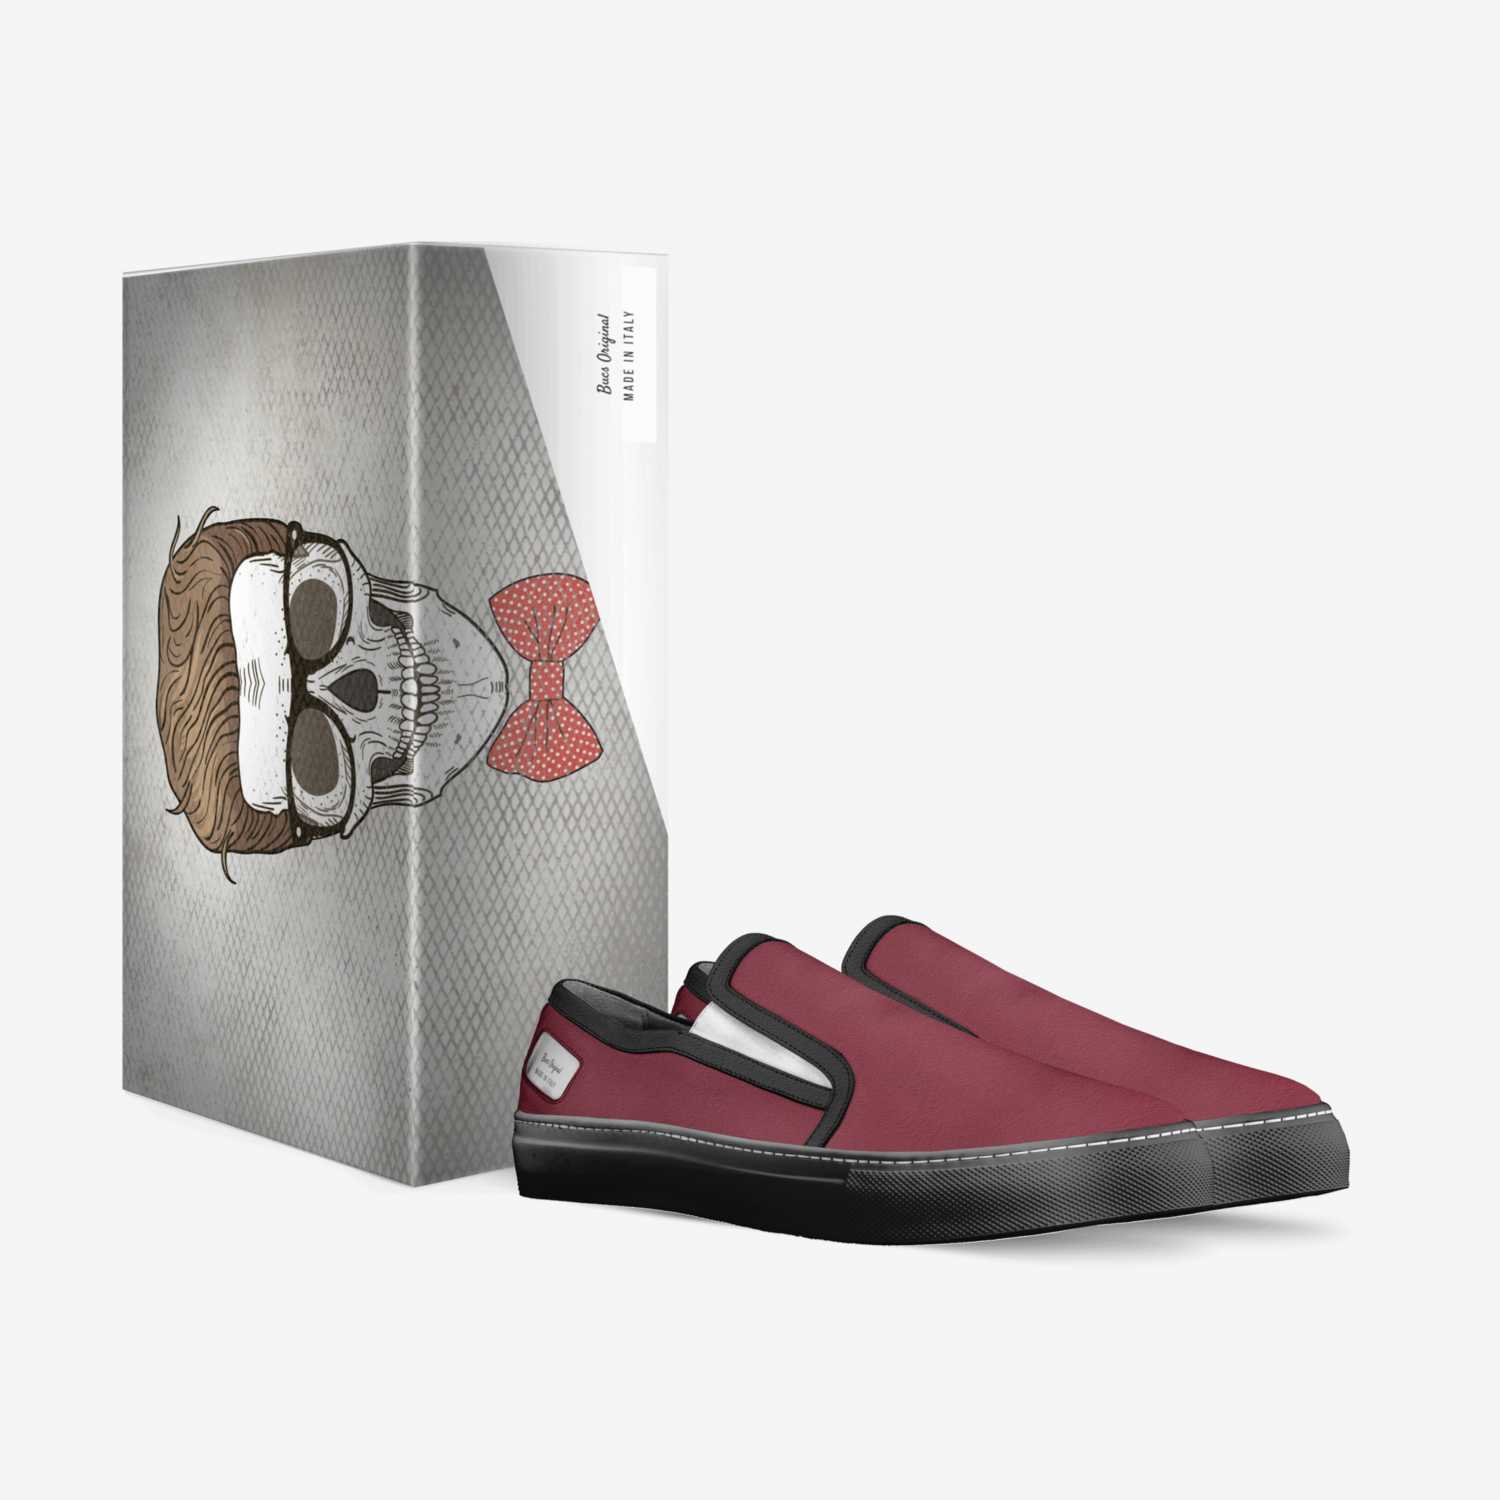 Bucs Original custom made in Italy shoes by Jeshua Martinez | Box view